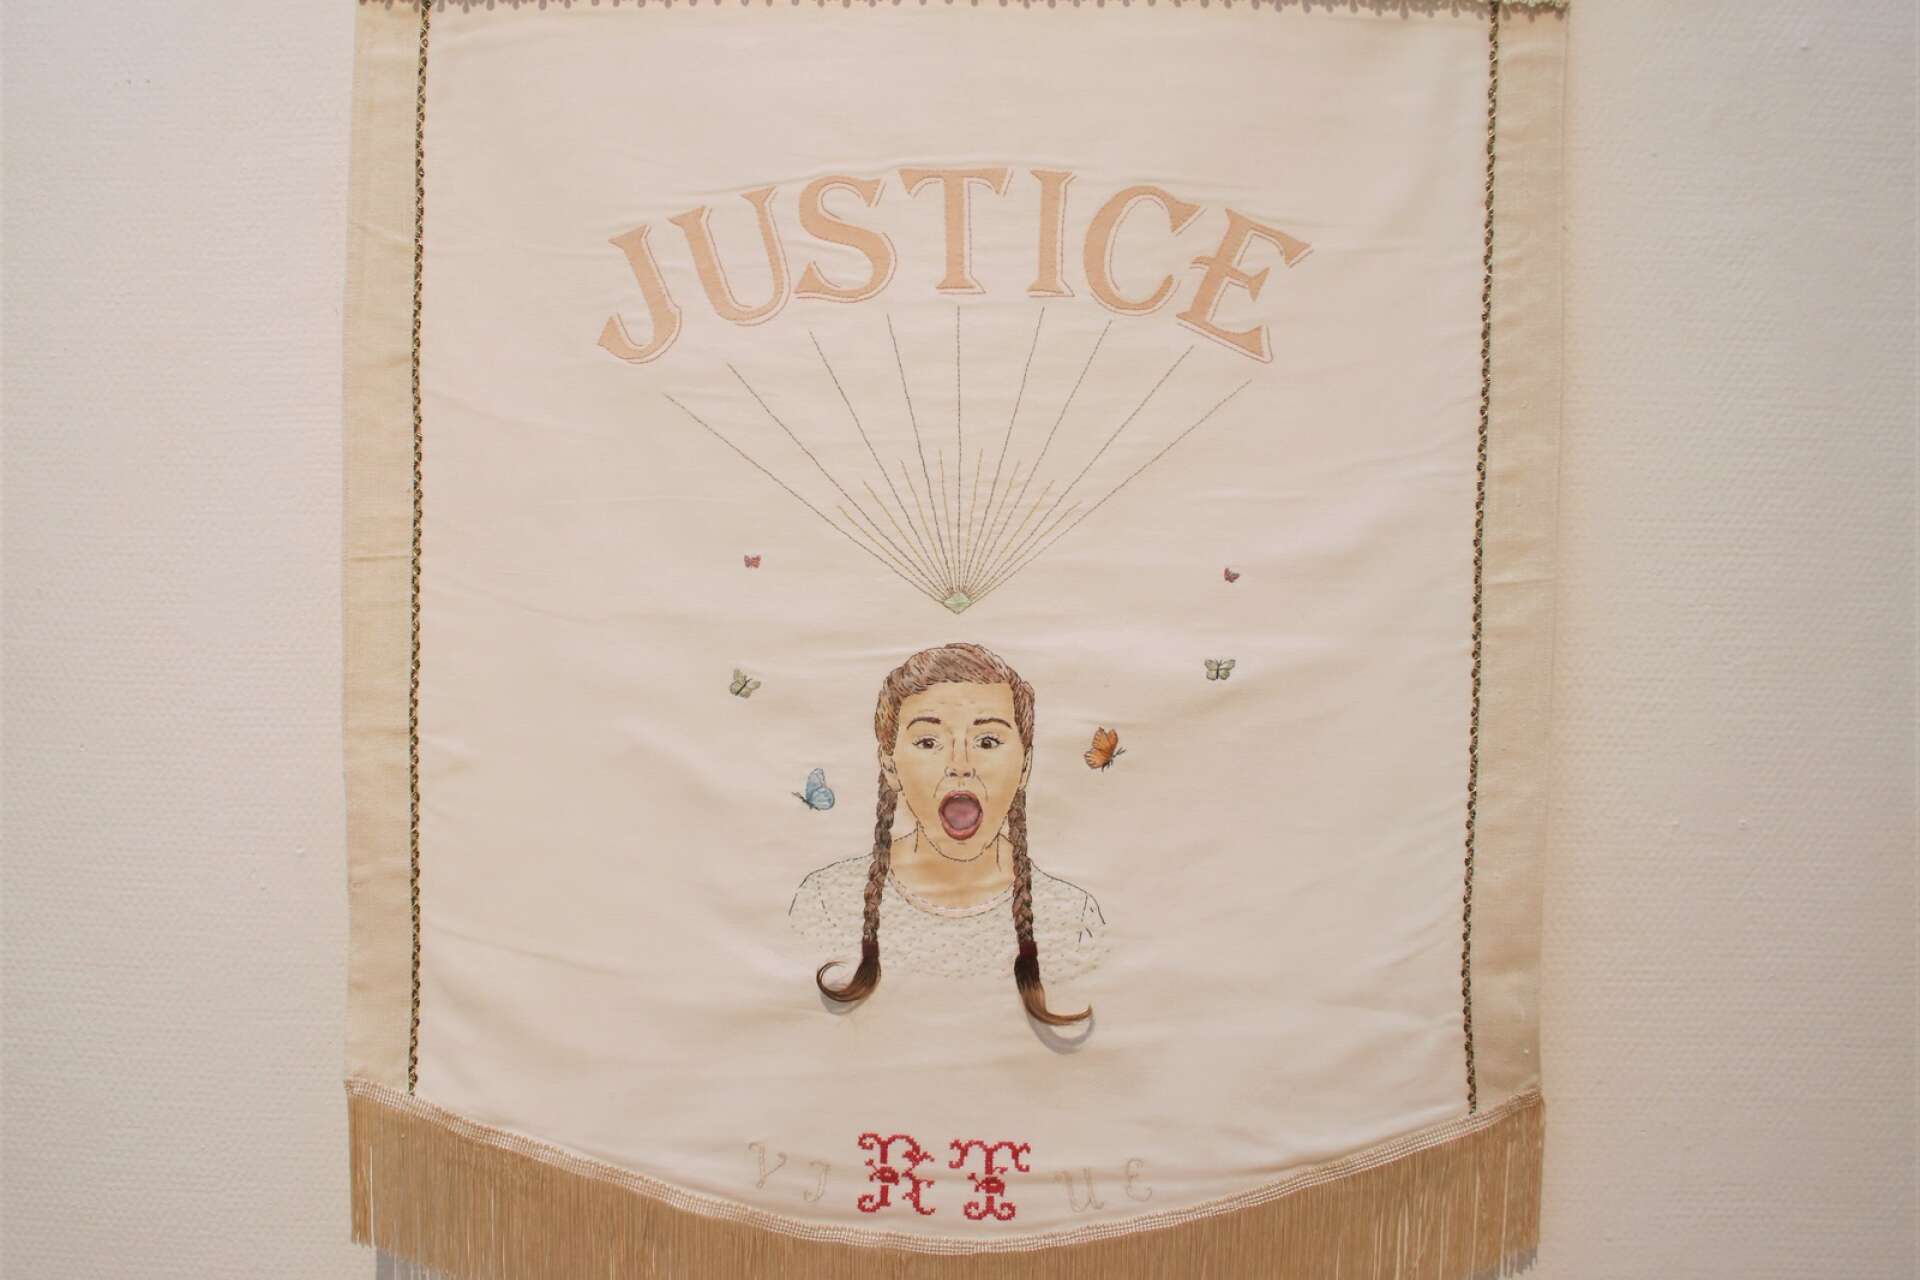 Erika Bromans verk ”Justice”. 